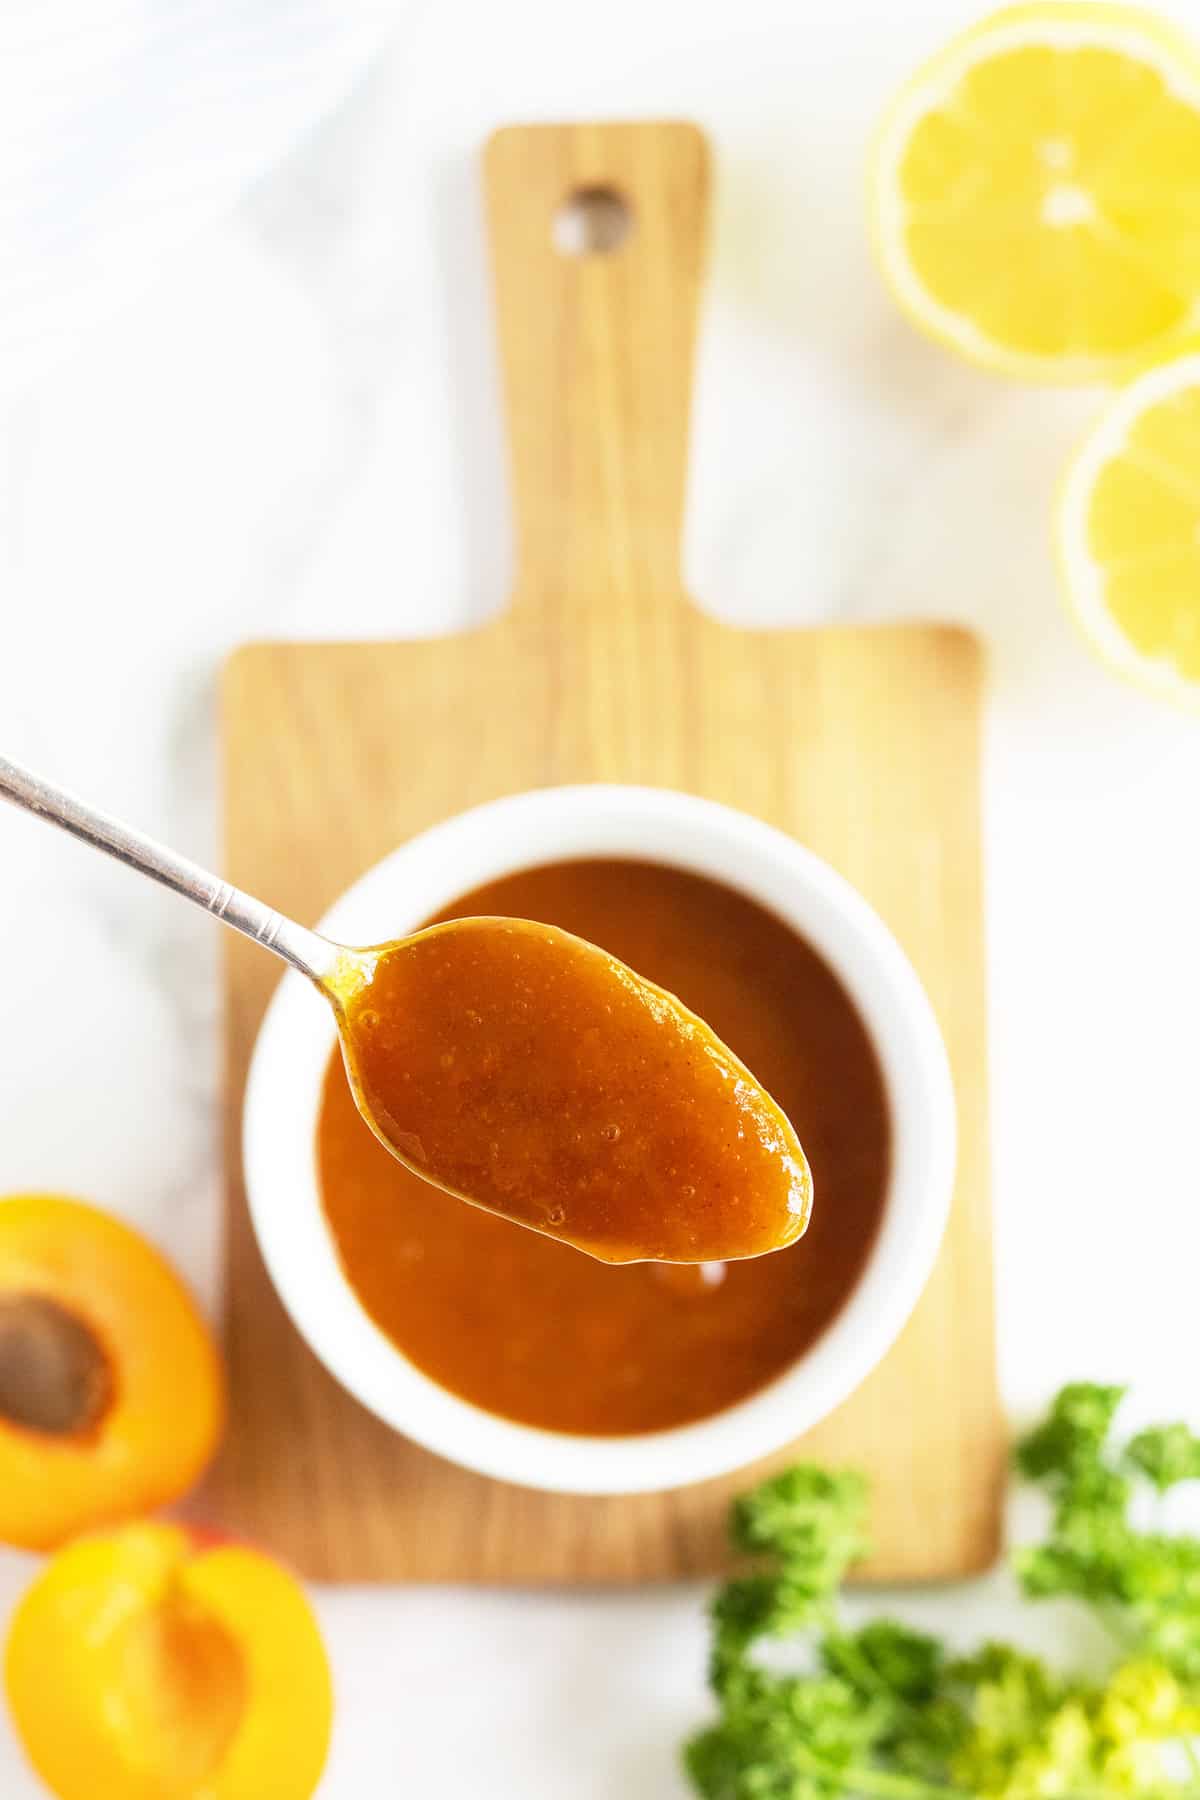 apricot glaze in a spoon